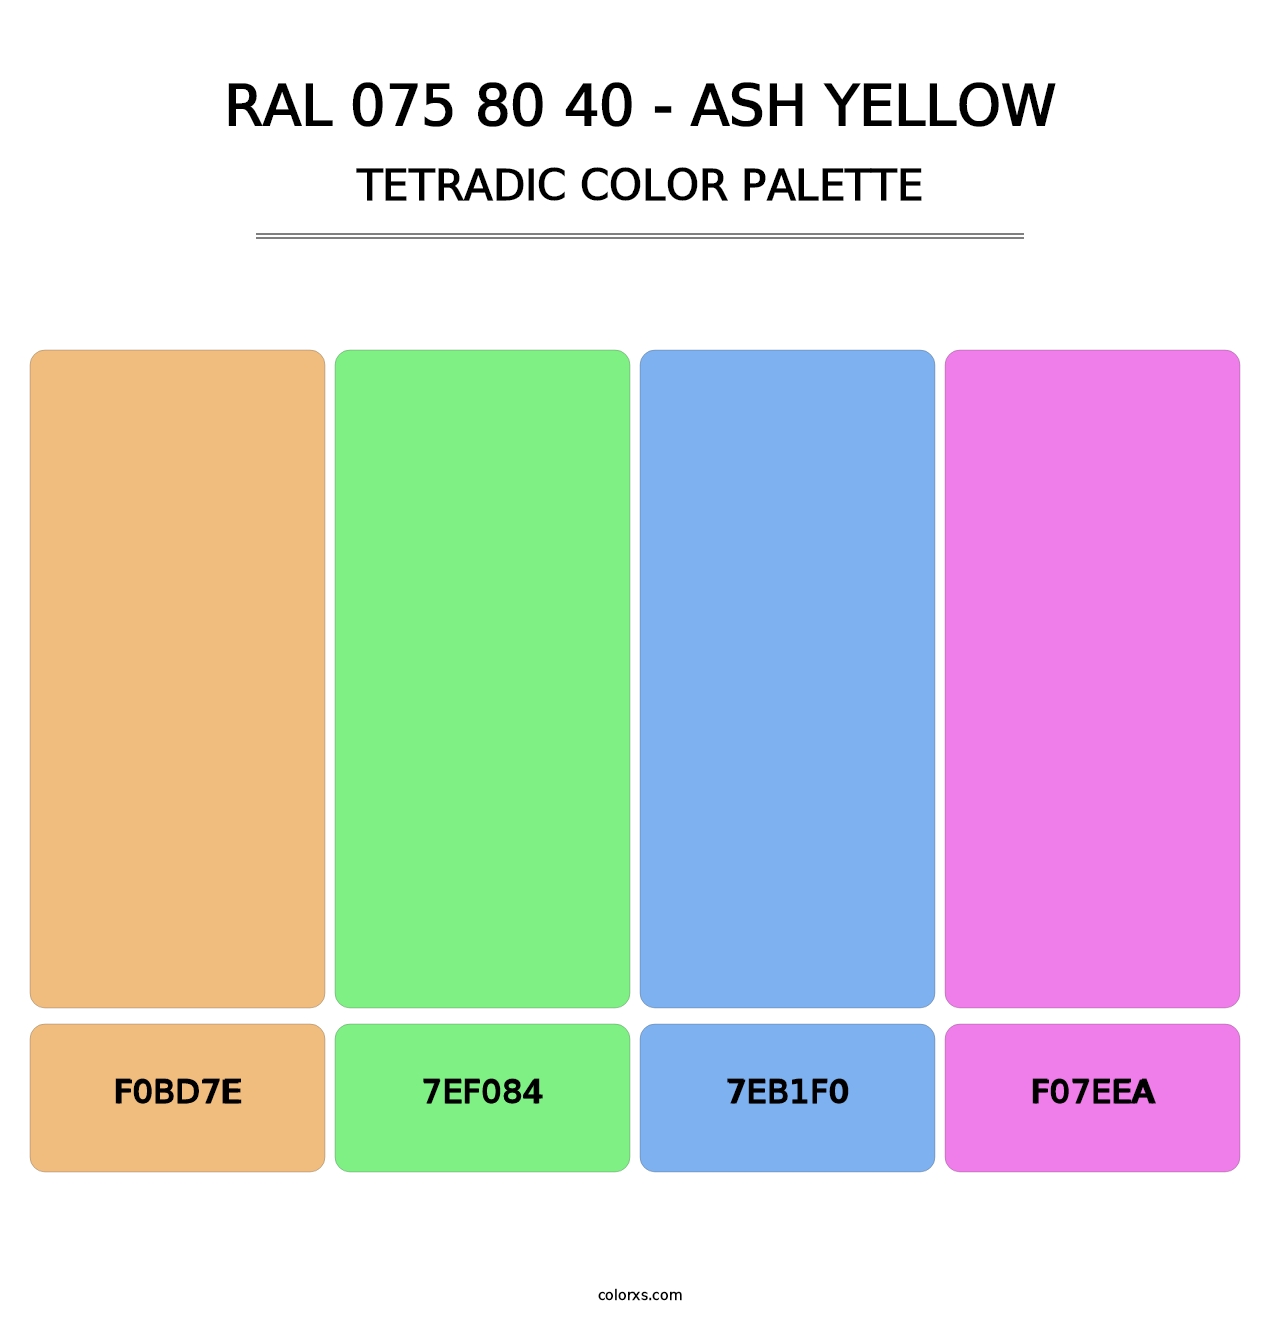 RAL 075 80 40 - Ash Yellow - Tetradic Color Palette